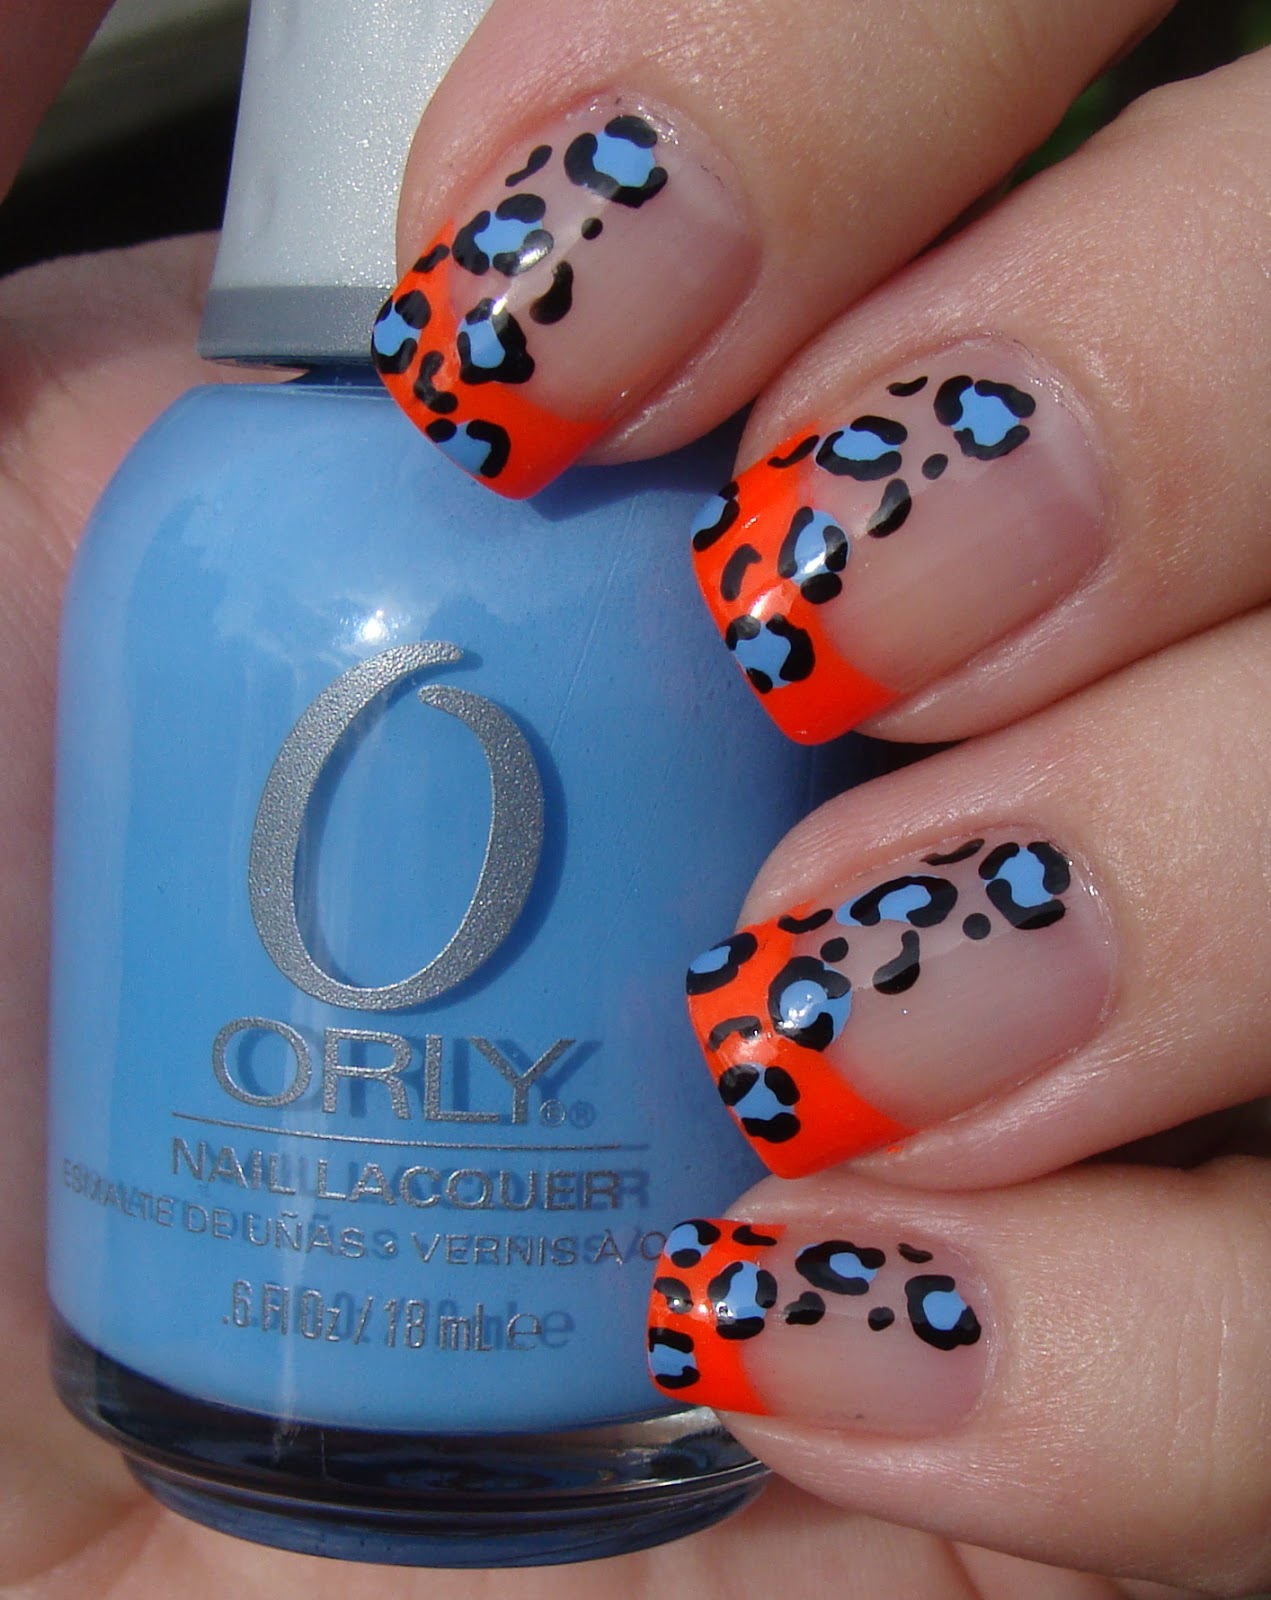 Blue and orange manicure!